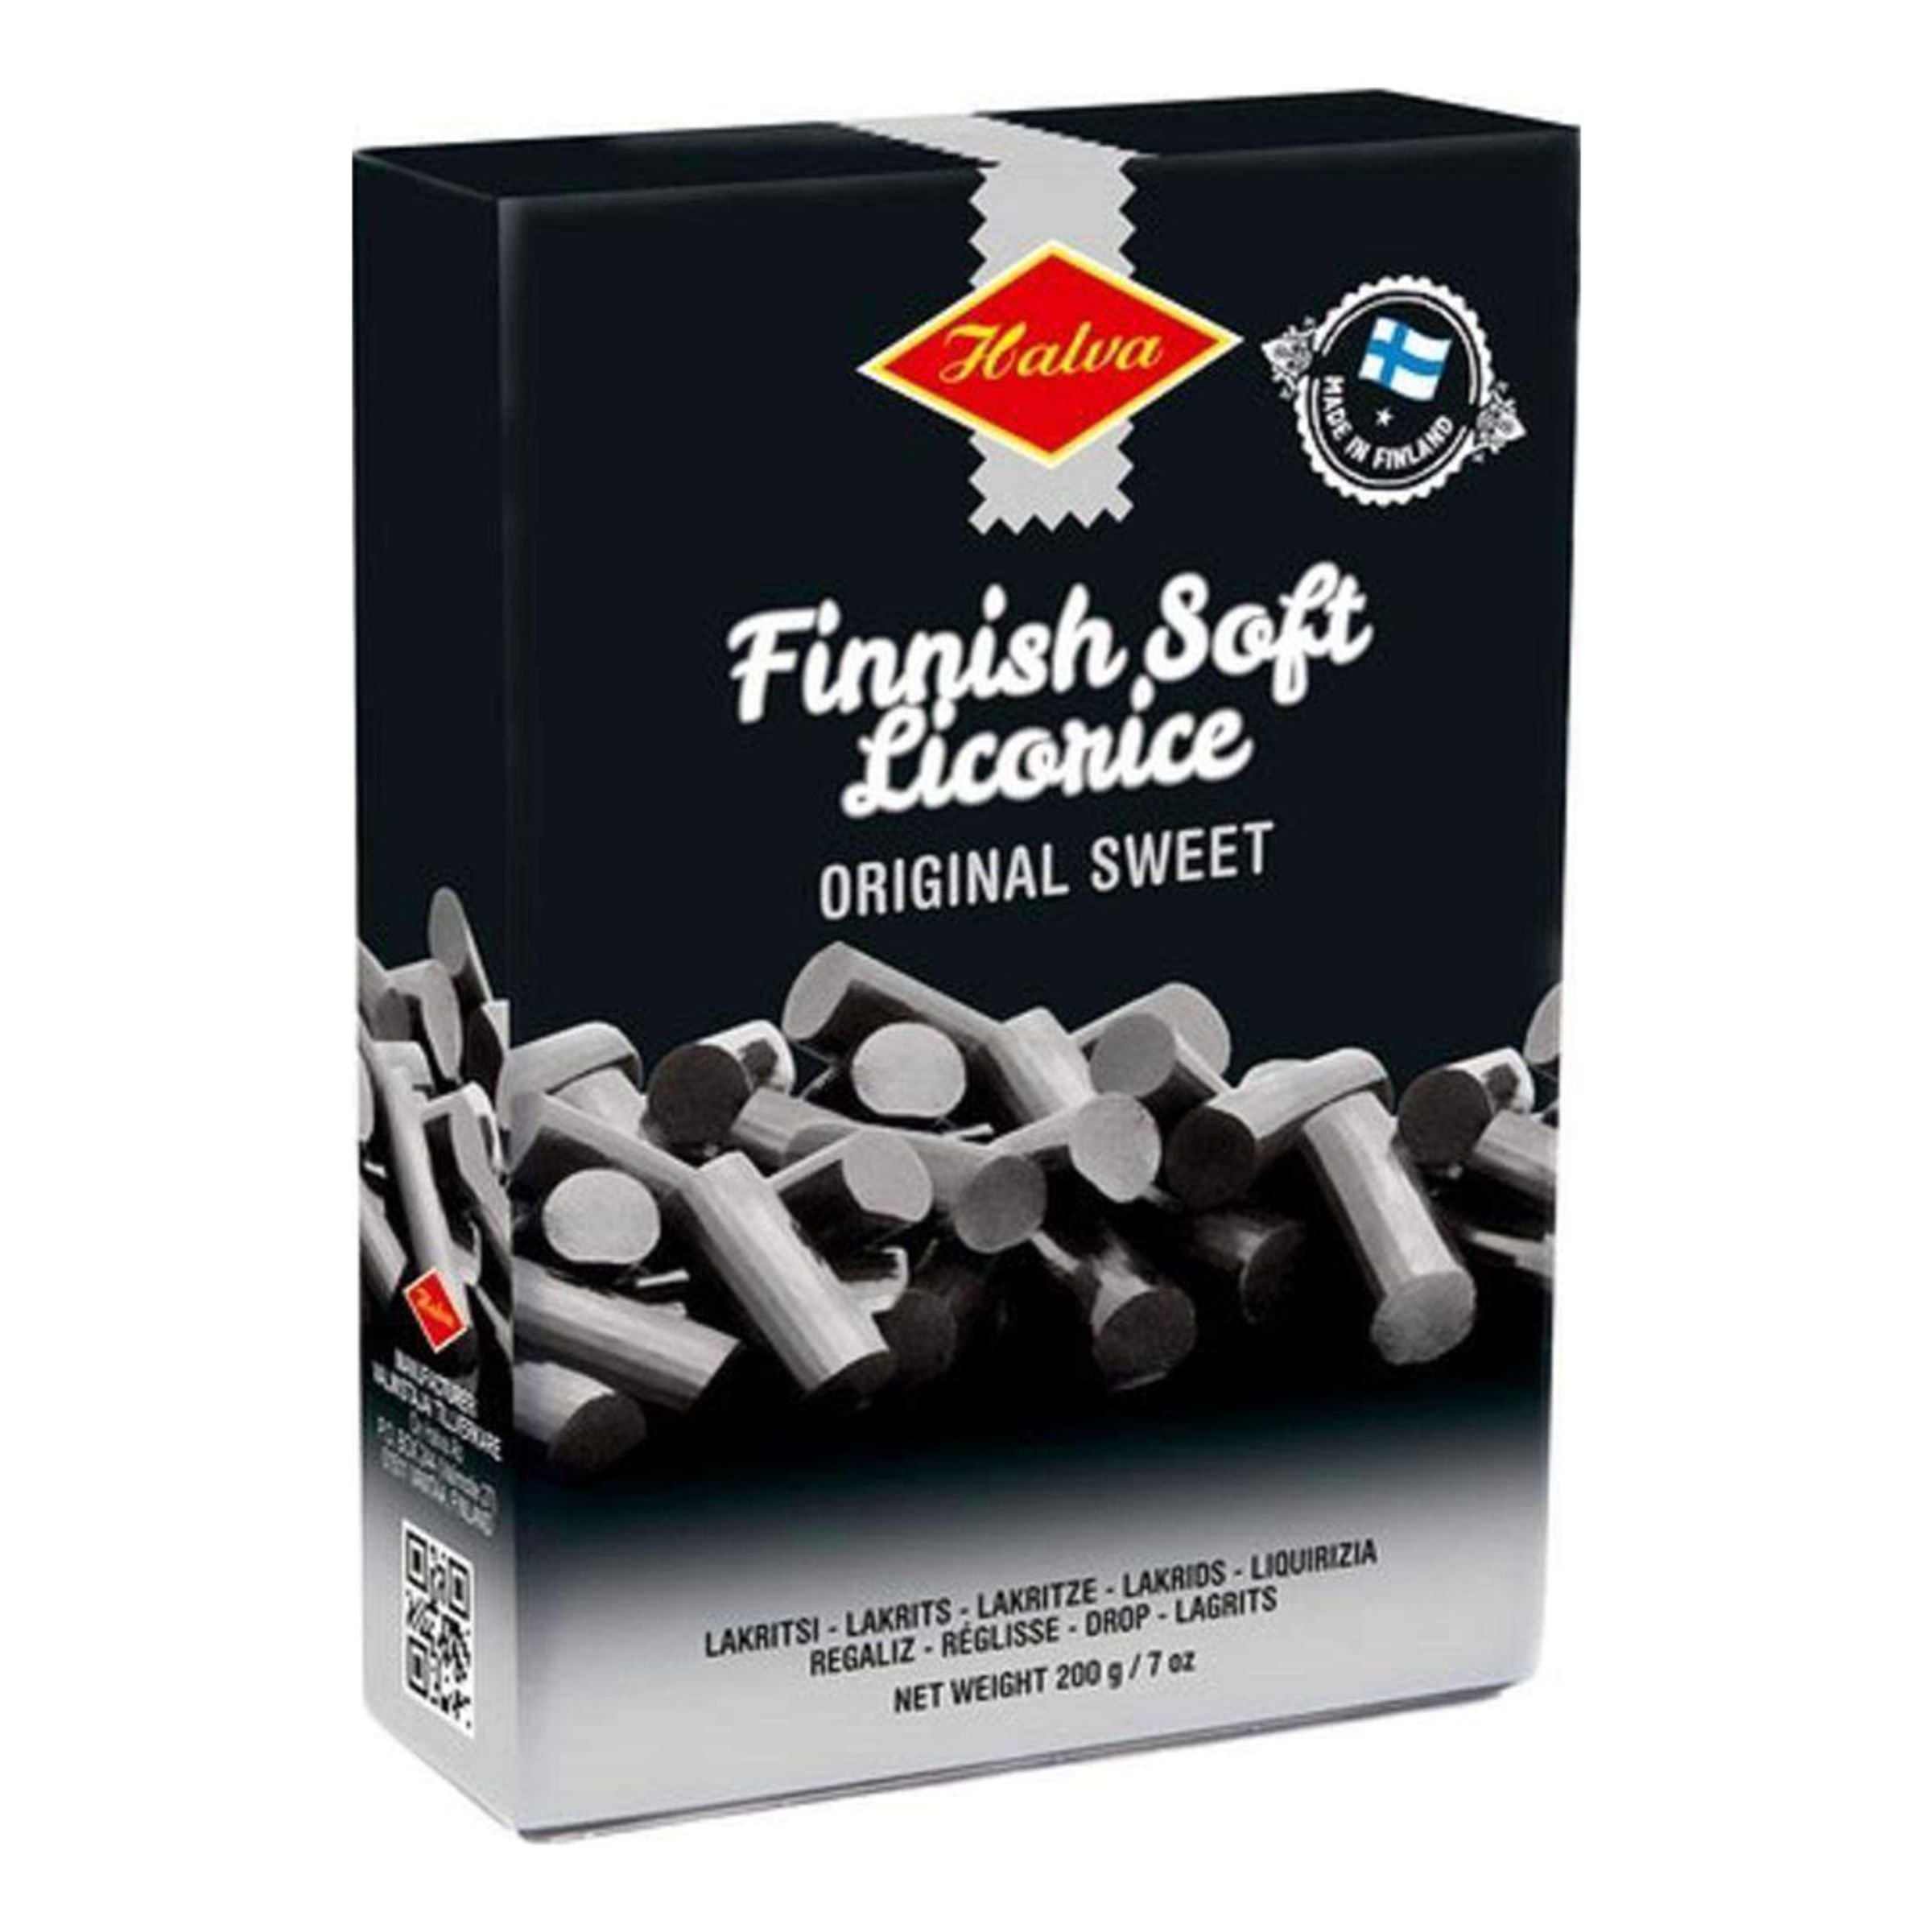 Finnish Soft Licorice Original Sweet